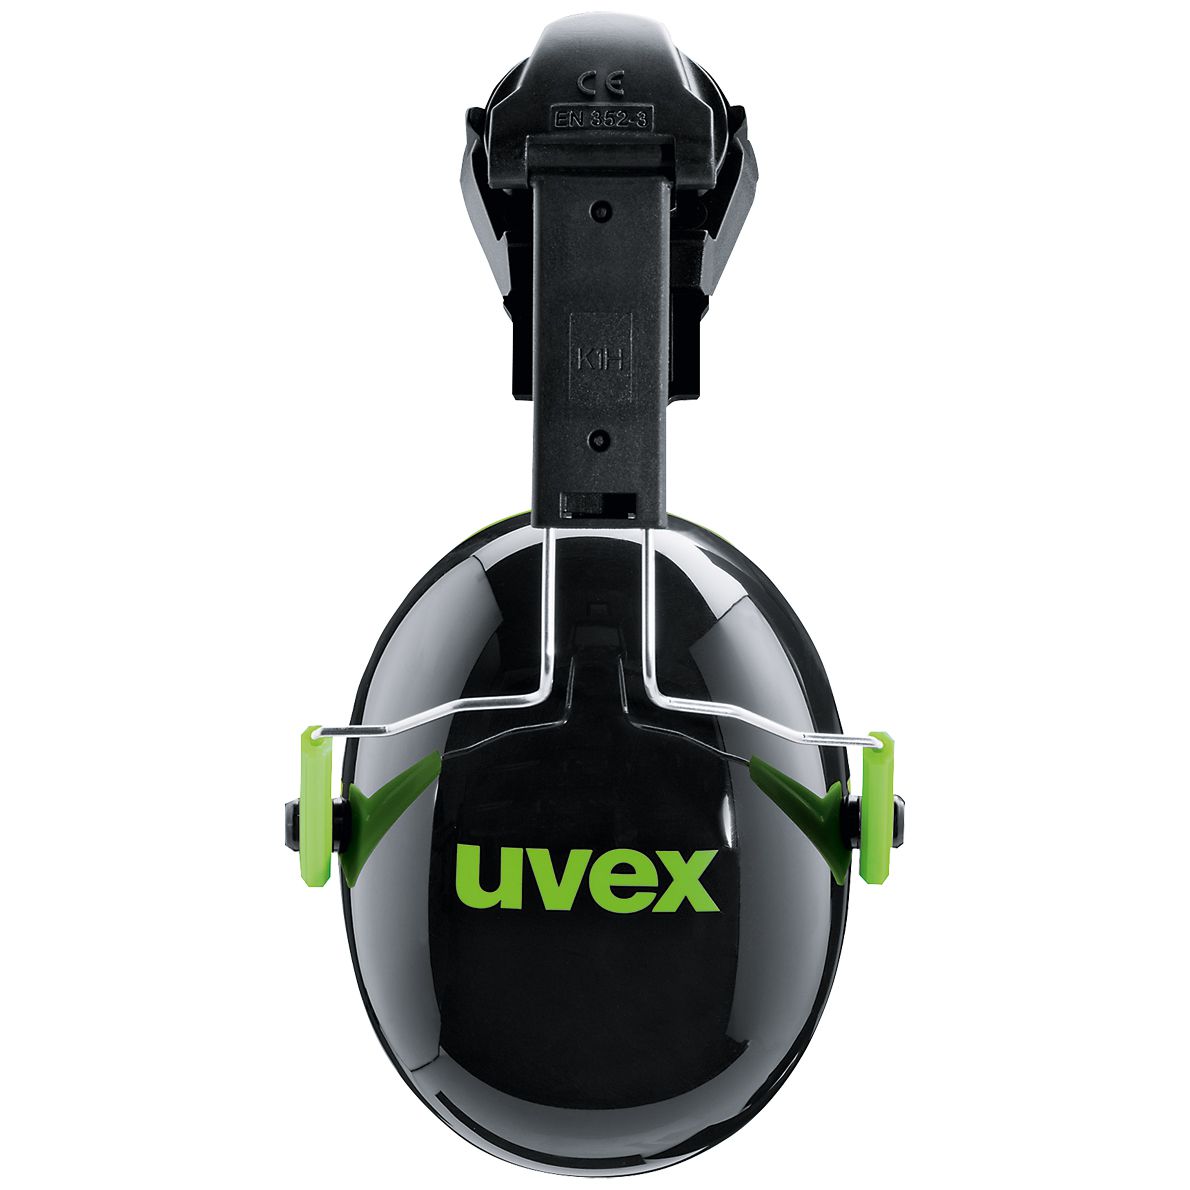 uvex K1H Helm-Kapselgehörschutz - Gehörschutz-Kapseln für uvex airwing, pheos B-WR, alpine & super boss - SNR: 27 dB